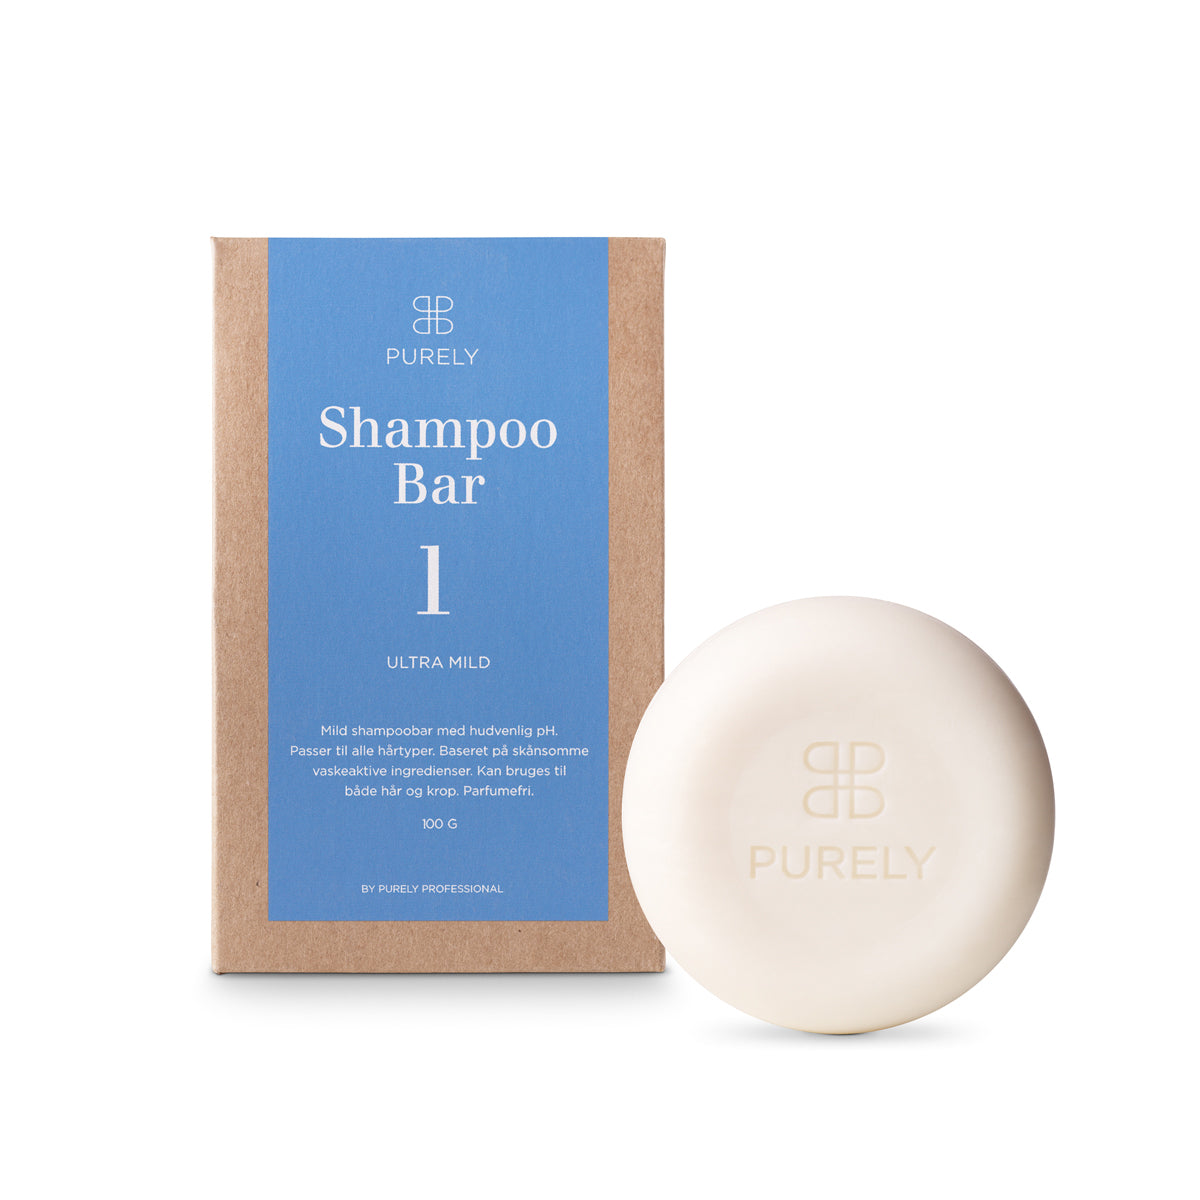 Shampoo Bar 1 – Professional